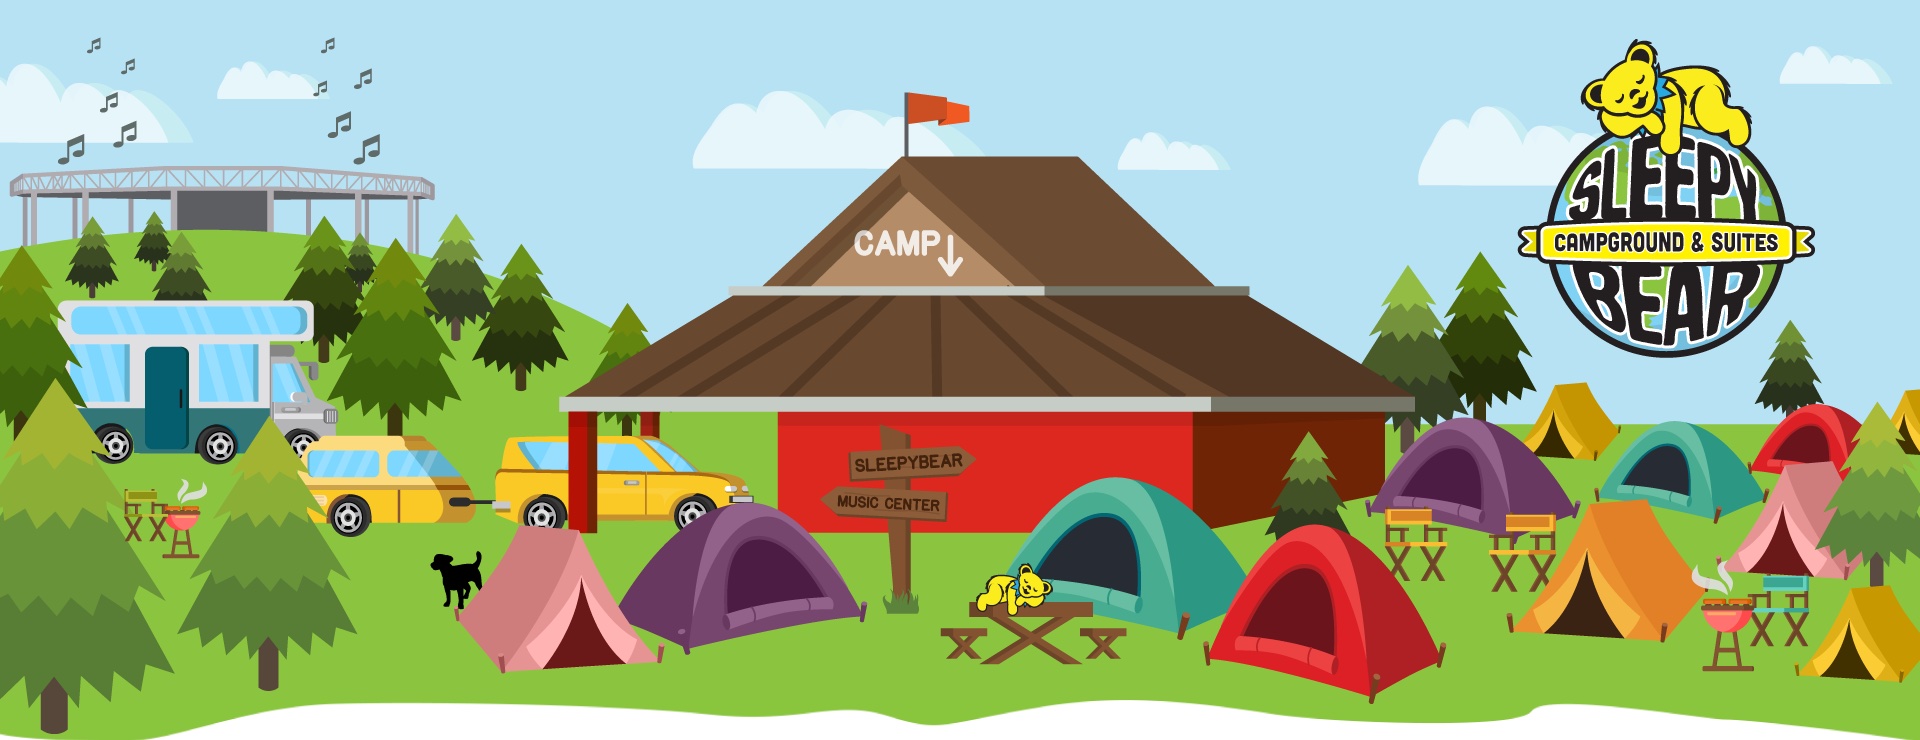 Sleepybear Campground Graphic